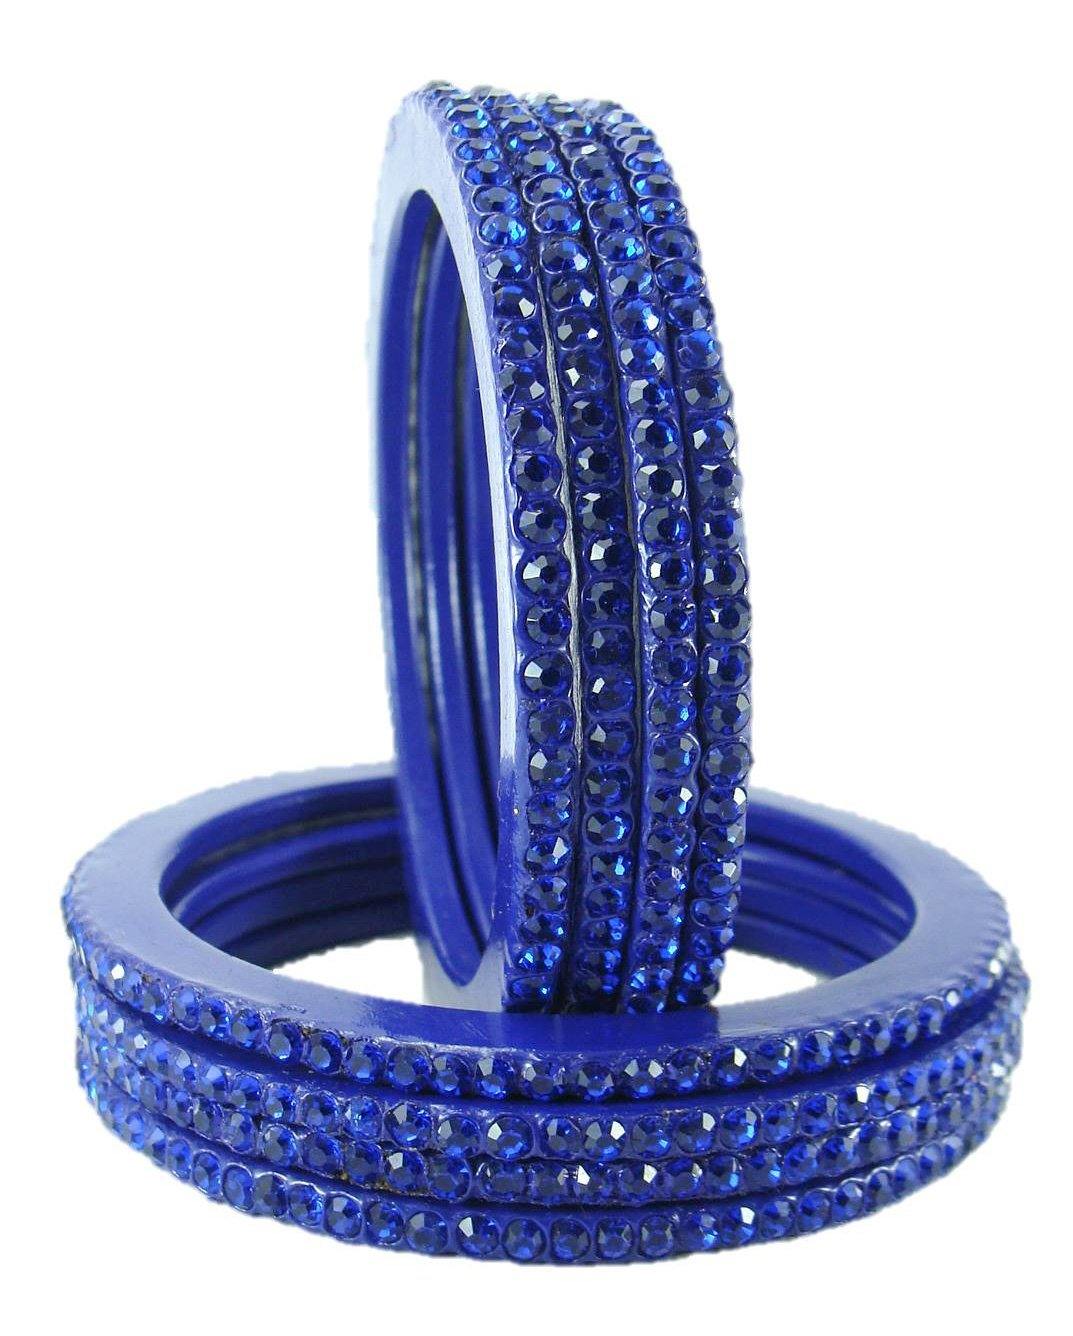 sukriti rajasthani traditional blue lac bangles for women - set of 8